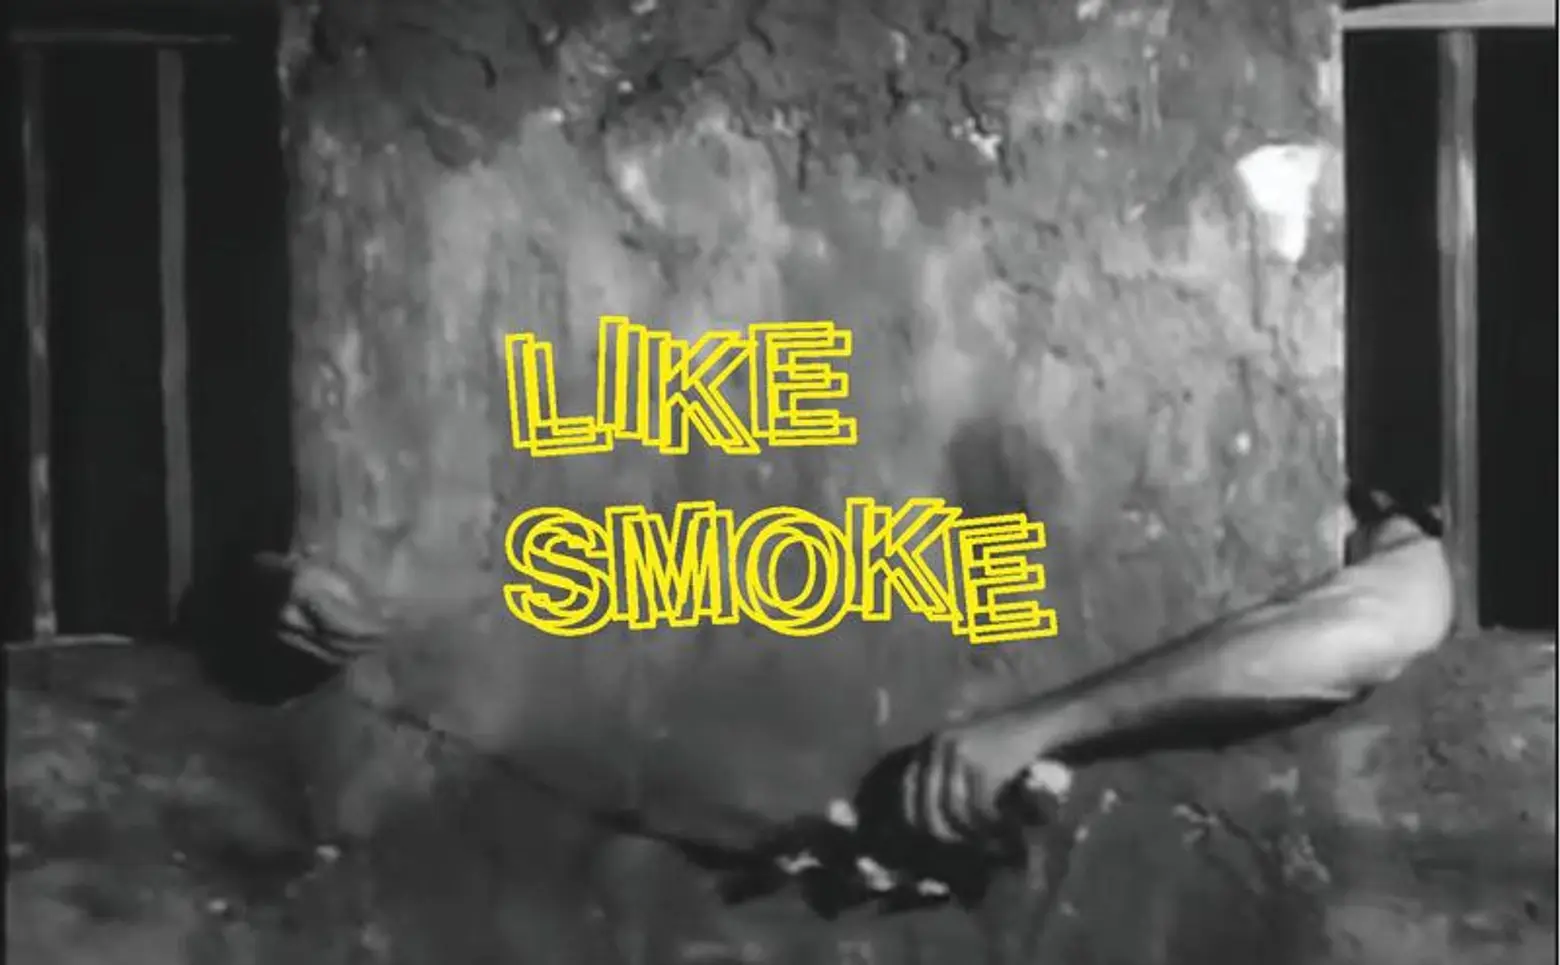 like-smoke